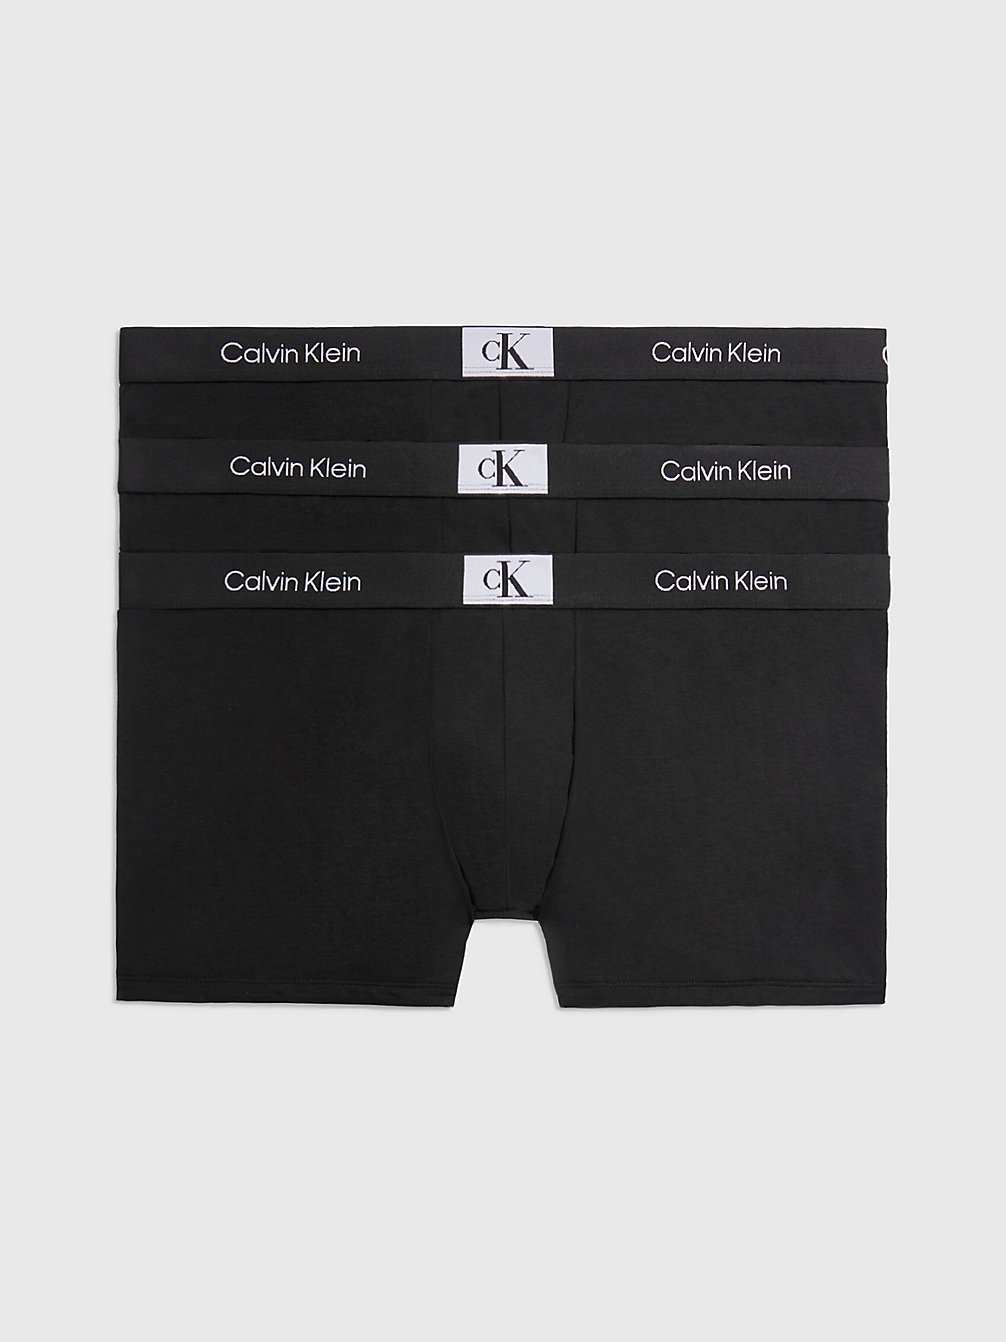 Packe De 3 Trunks De Talla Grande - Ck96 > BLACK/ BLACK/ BLACK > undefined mujer > Calvin Klein